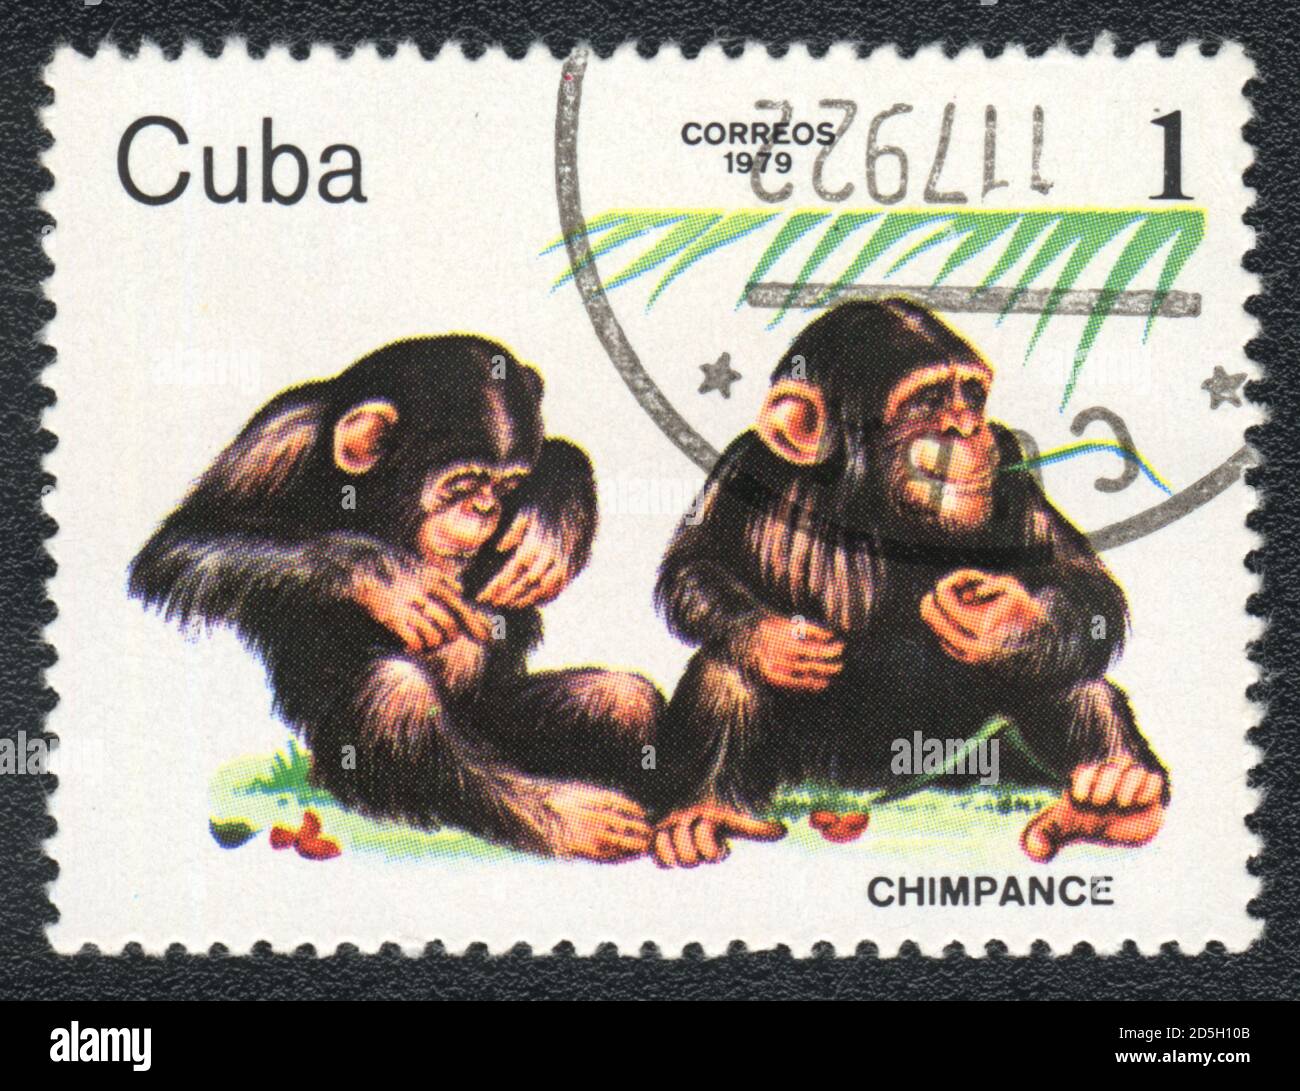 Sello postal. Dos pequeños simios, serie de animales de bebé, Cuba, 1979 Foto de stock